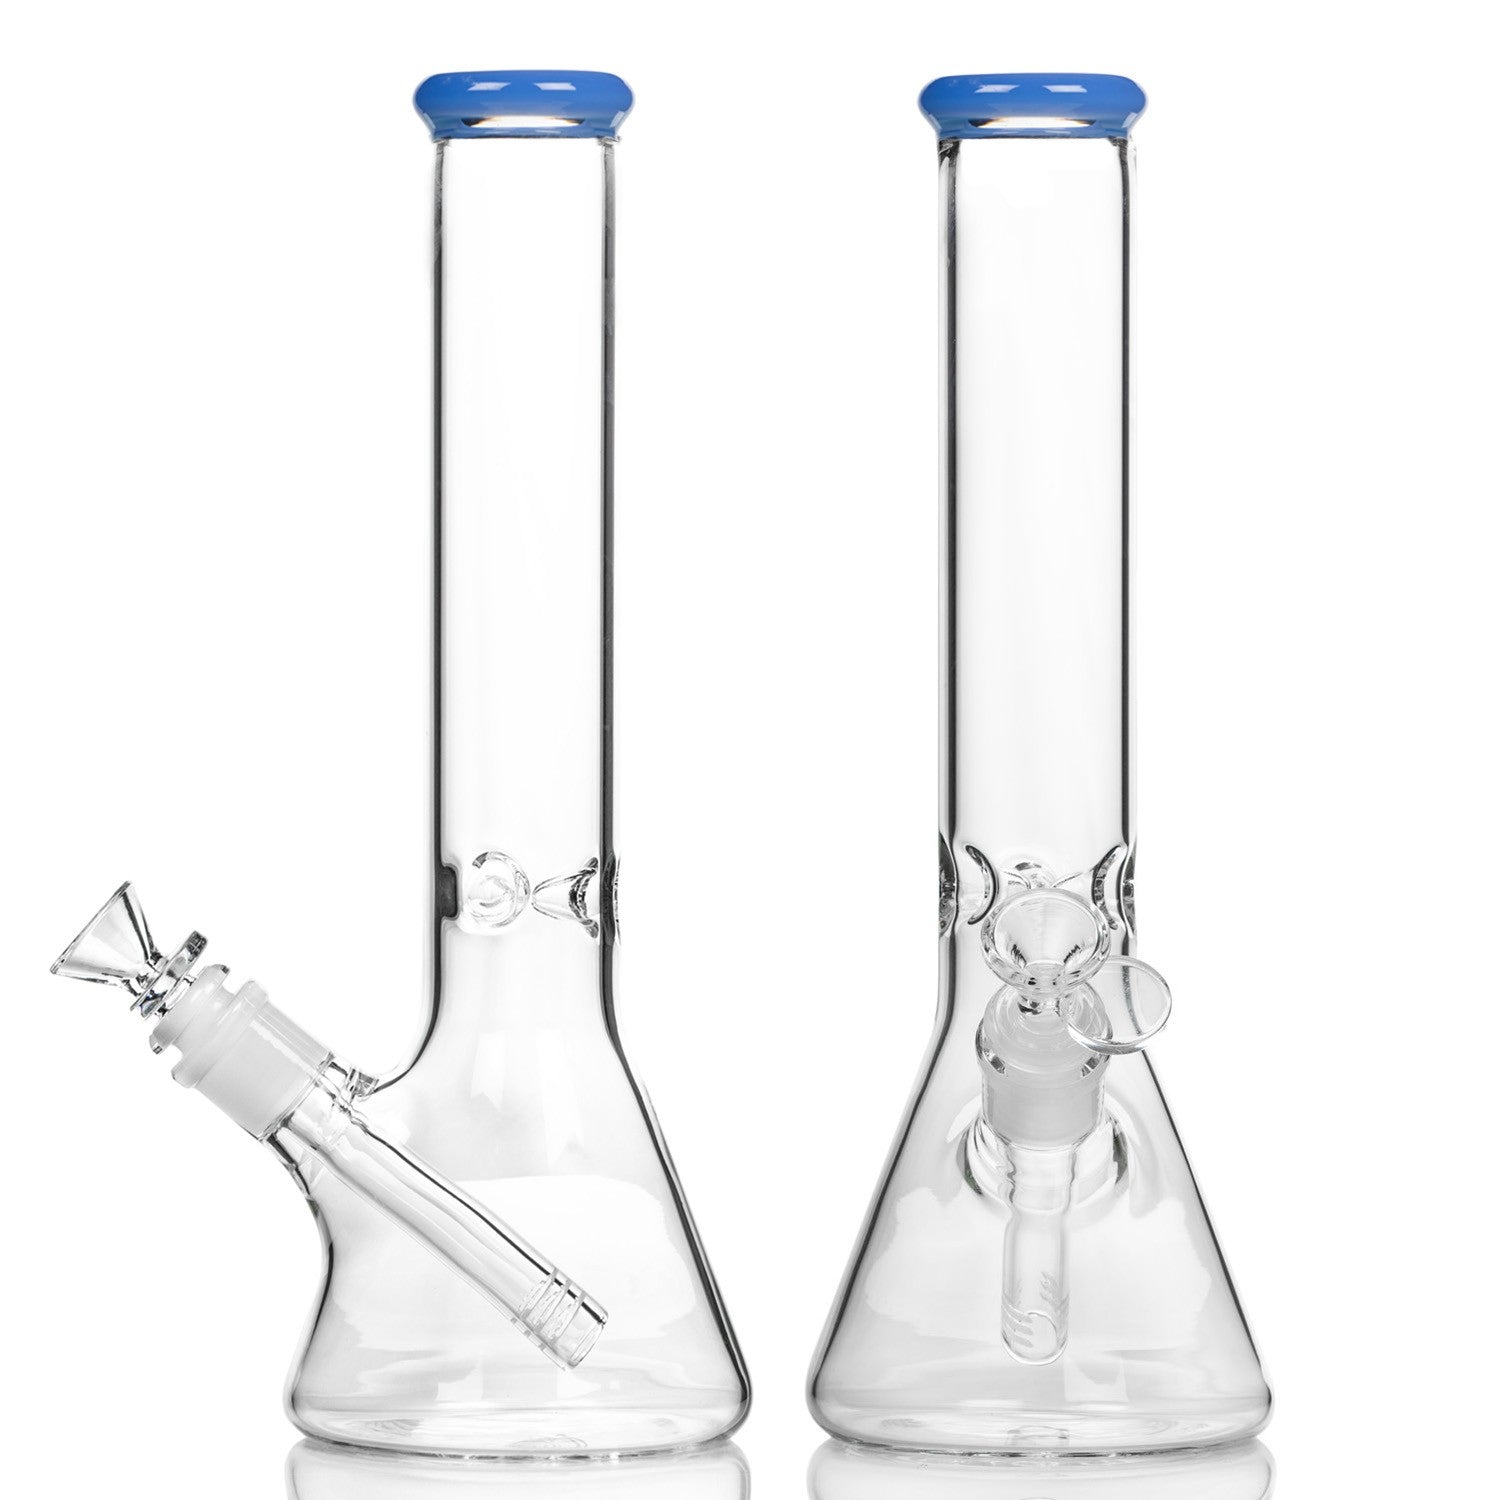 Cute glass bongs online for Aussie legal cannabis smokers.